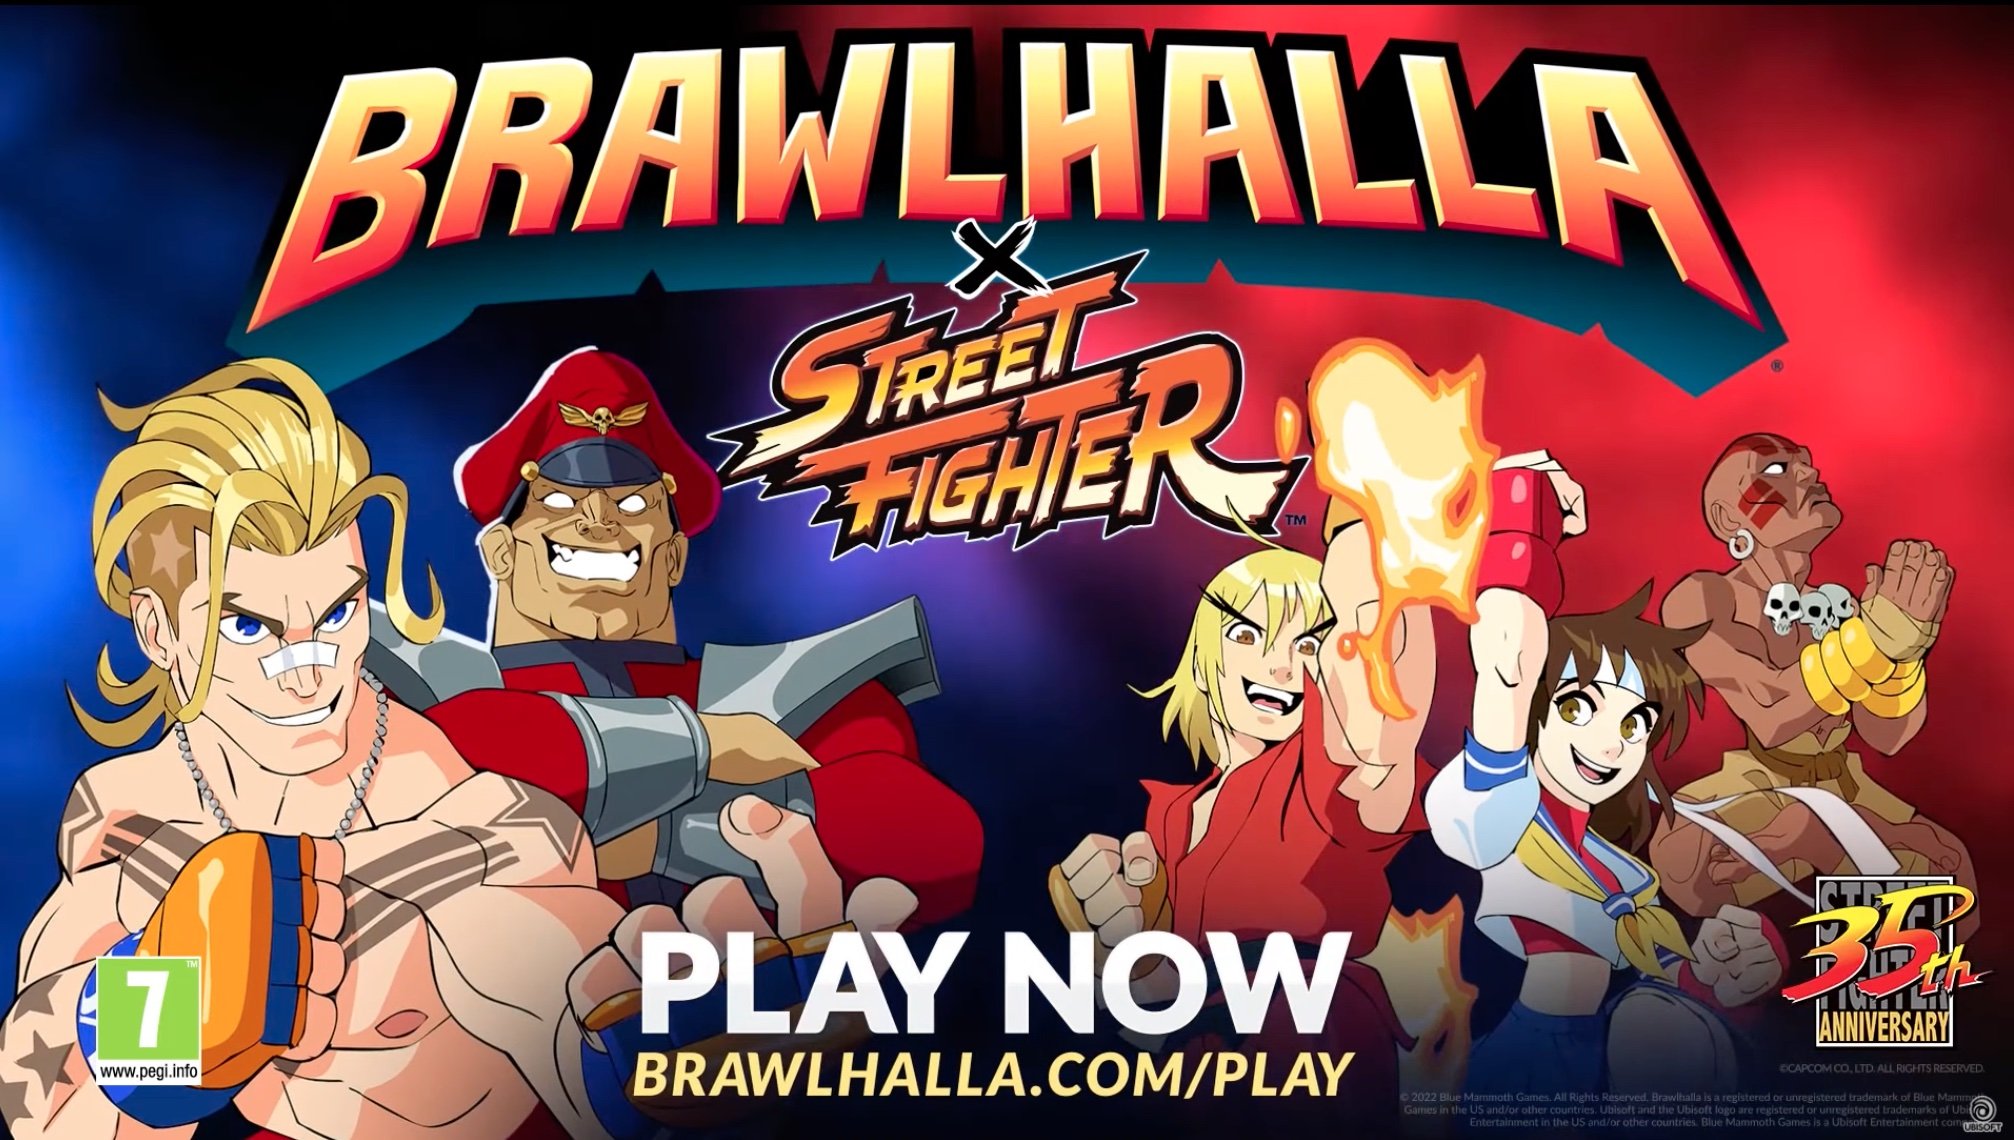 Brawlhalla X Street Fighter Artwork